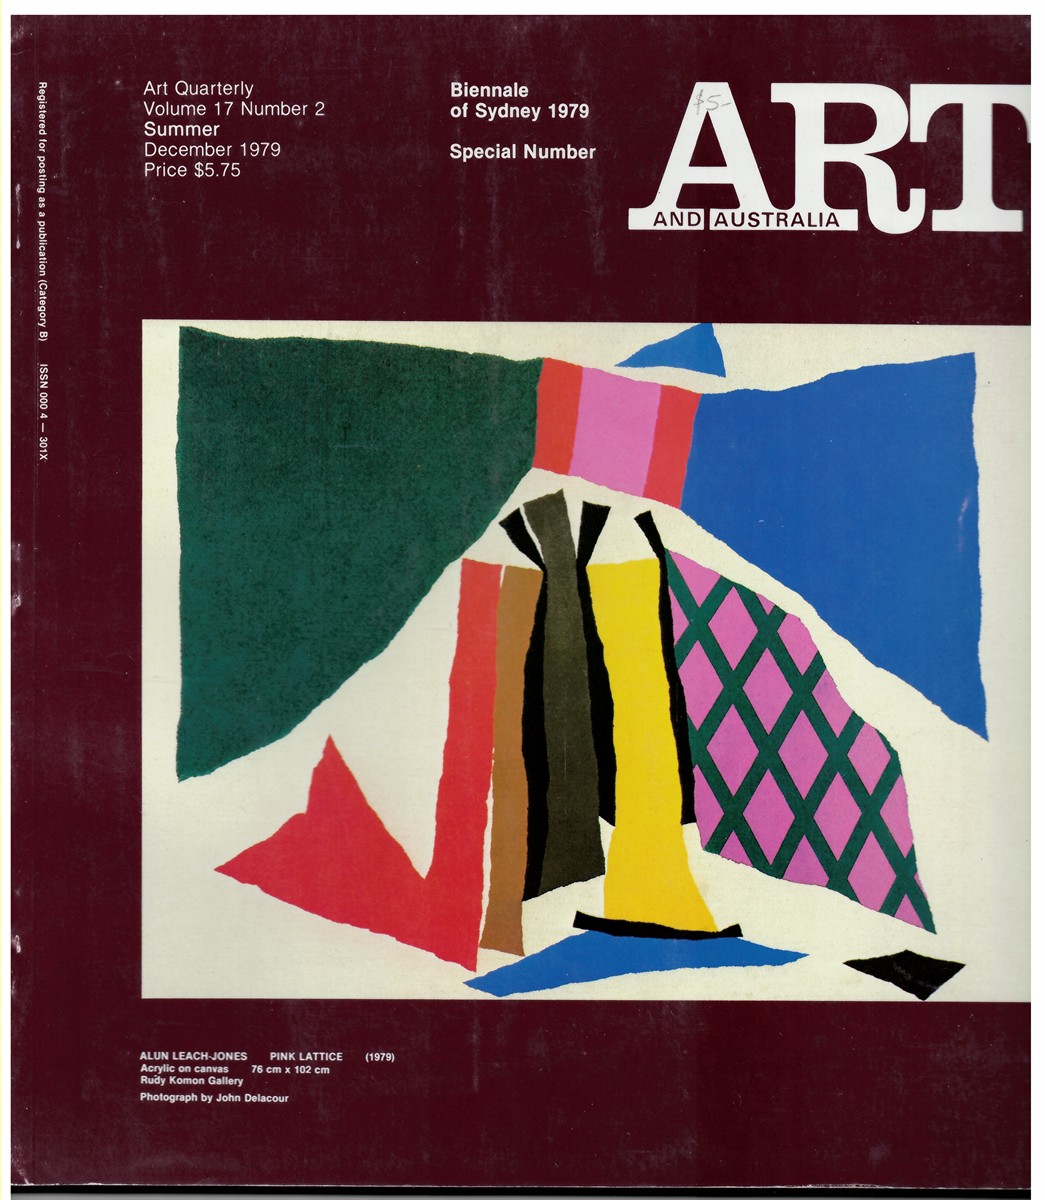 HORTON, MERVYN (EDITOR) - Art and Australia. Volume 17 Number 2 Summer December 1979